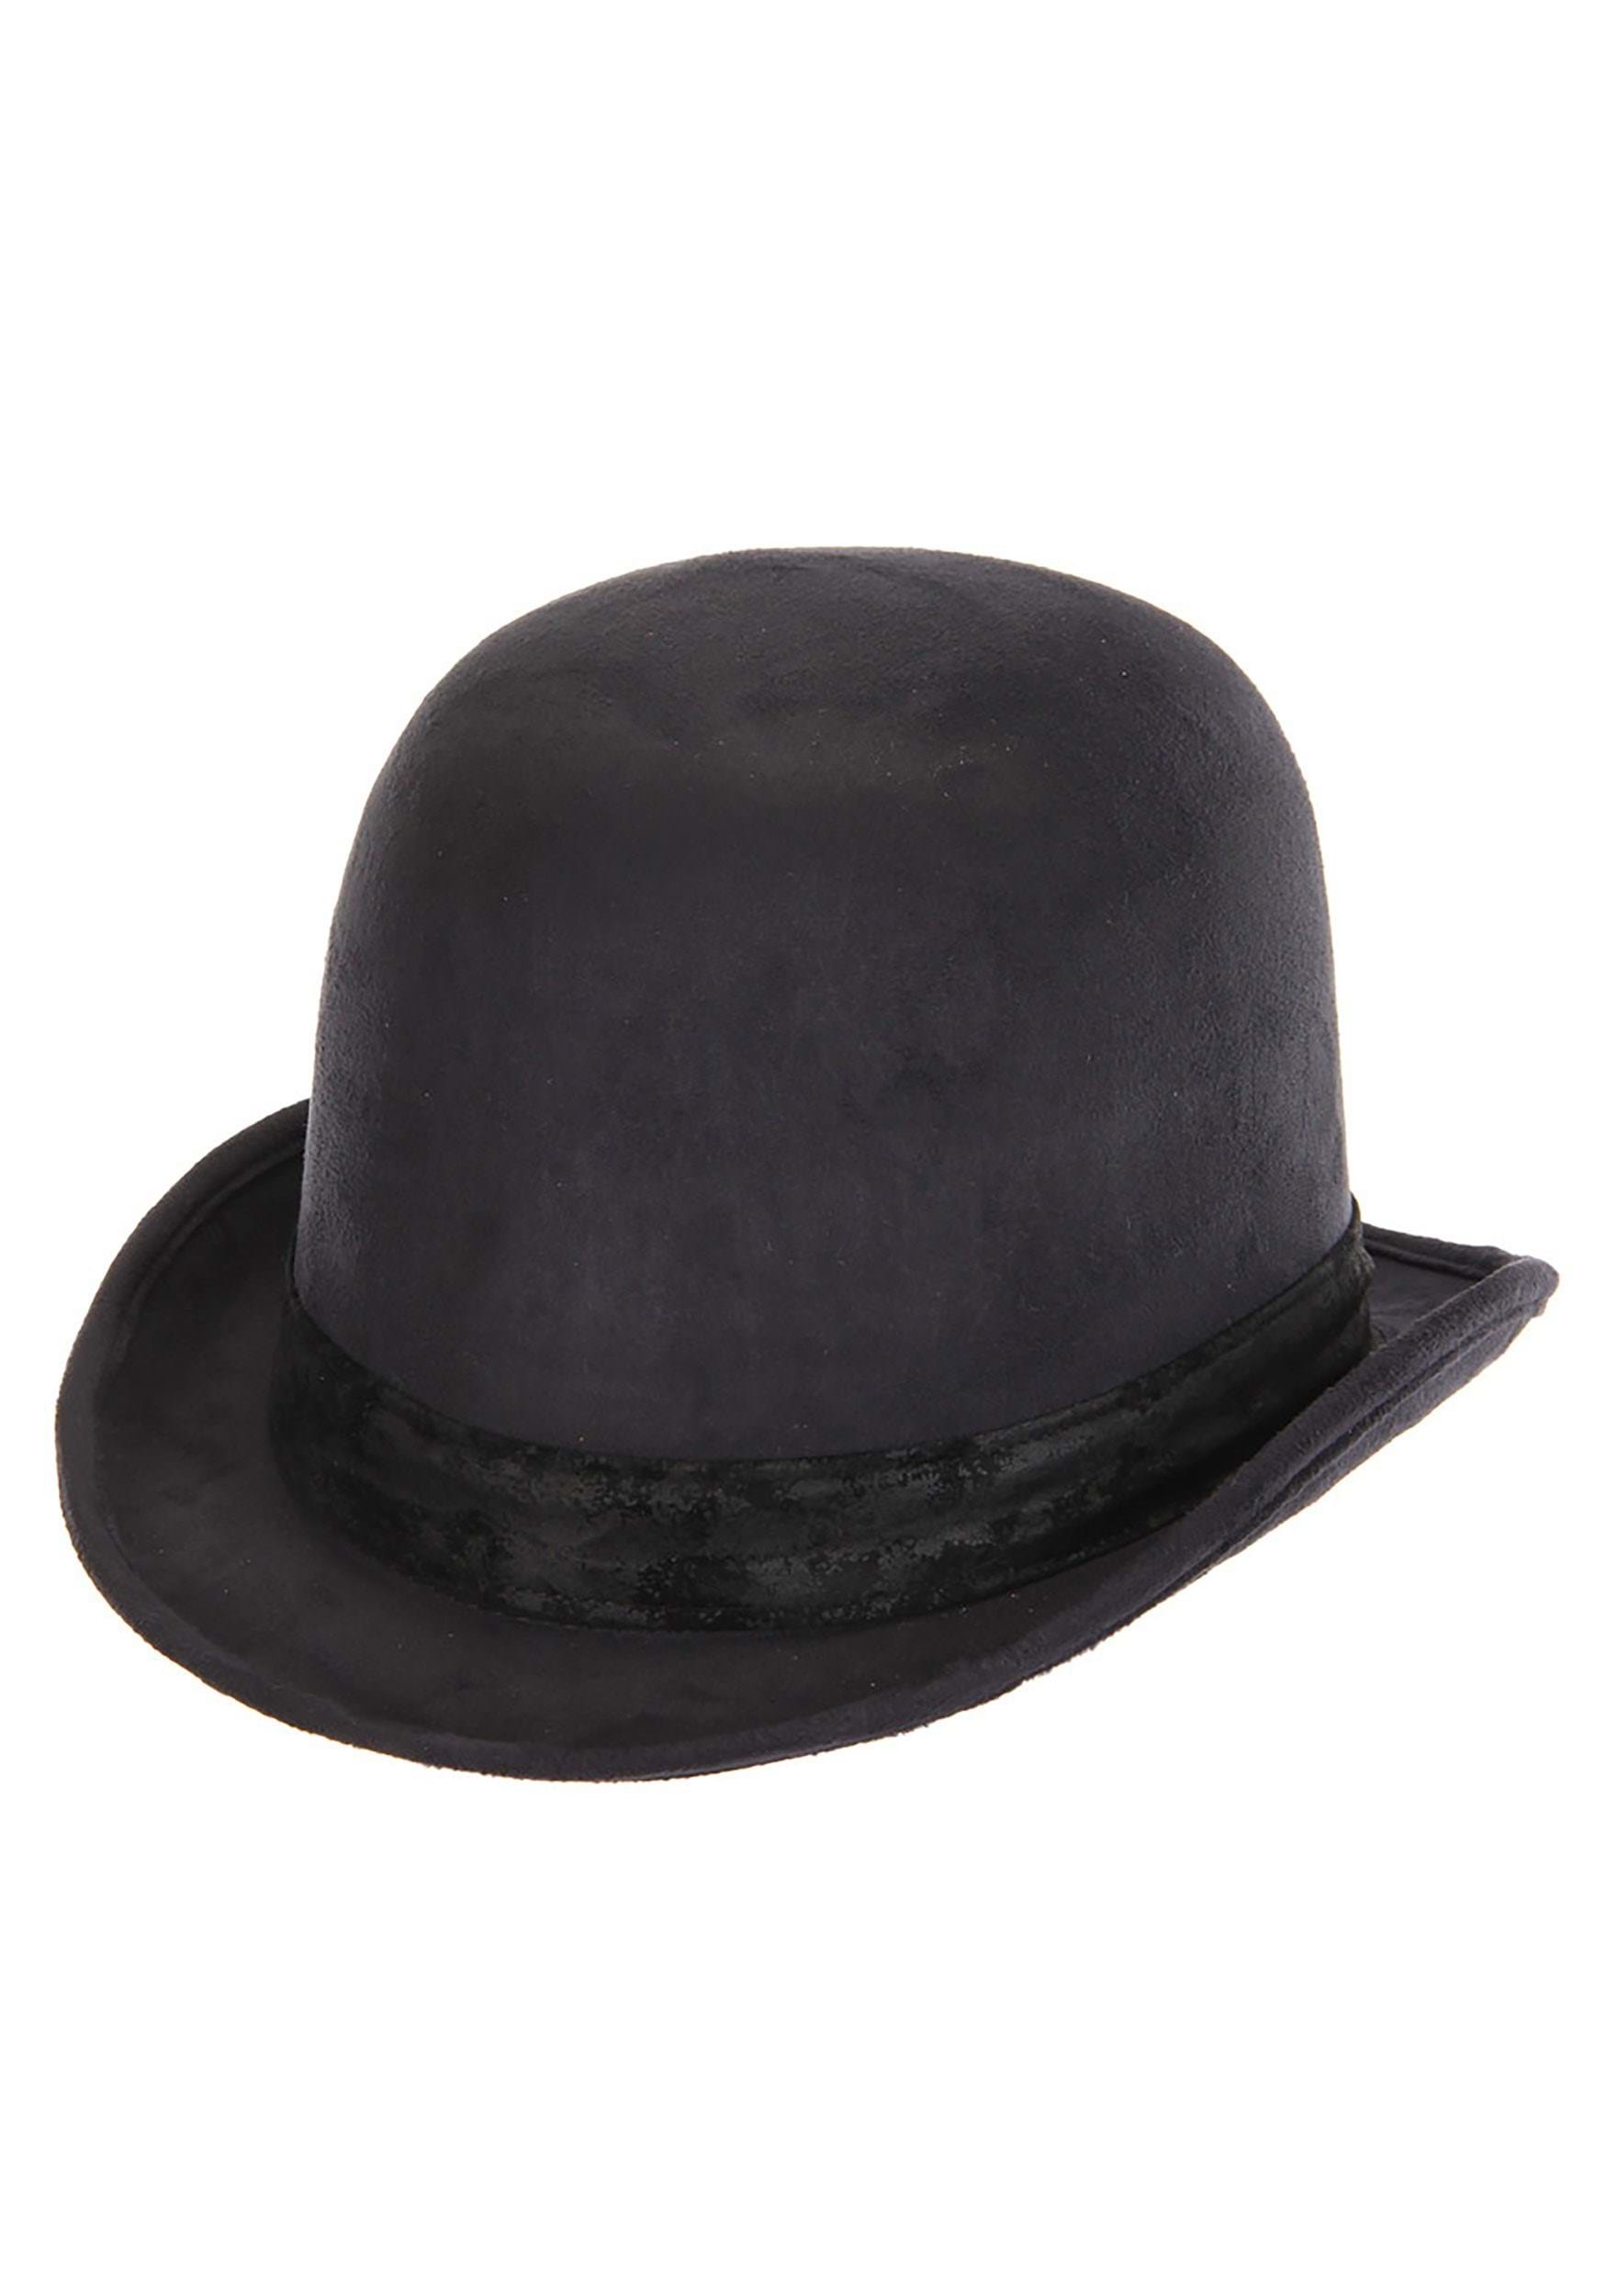 Black Costume Derby Hat